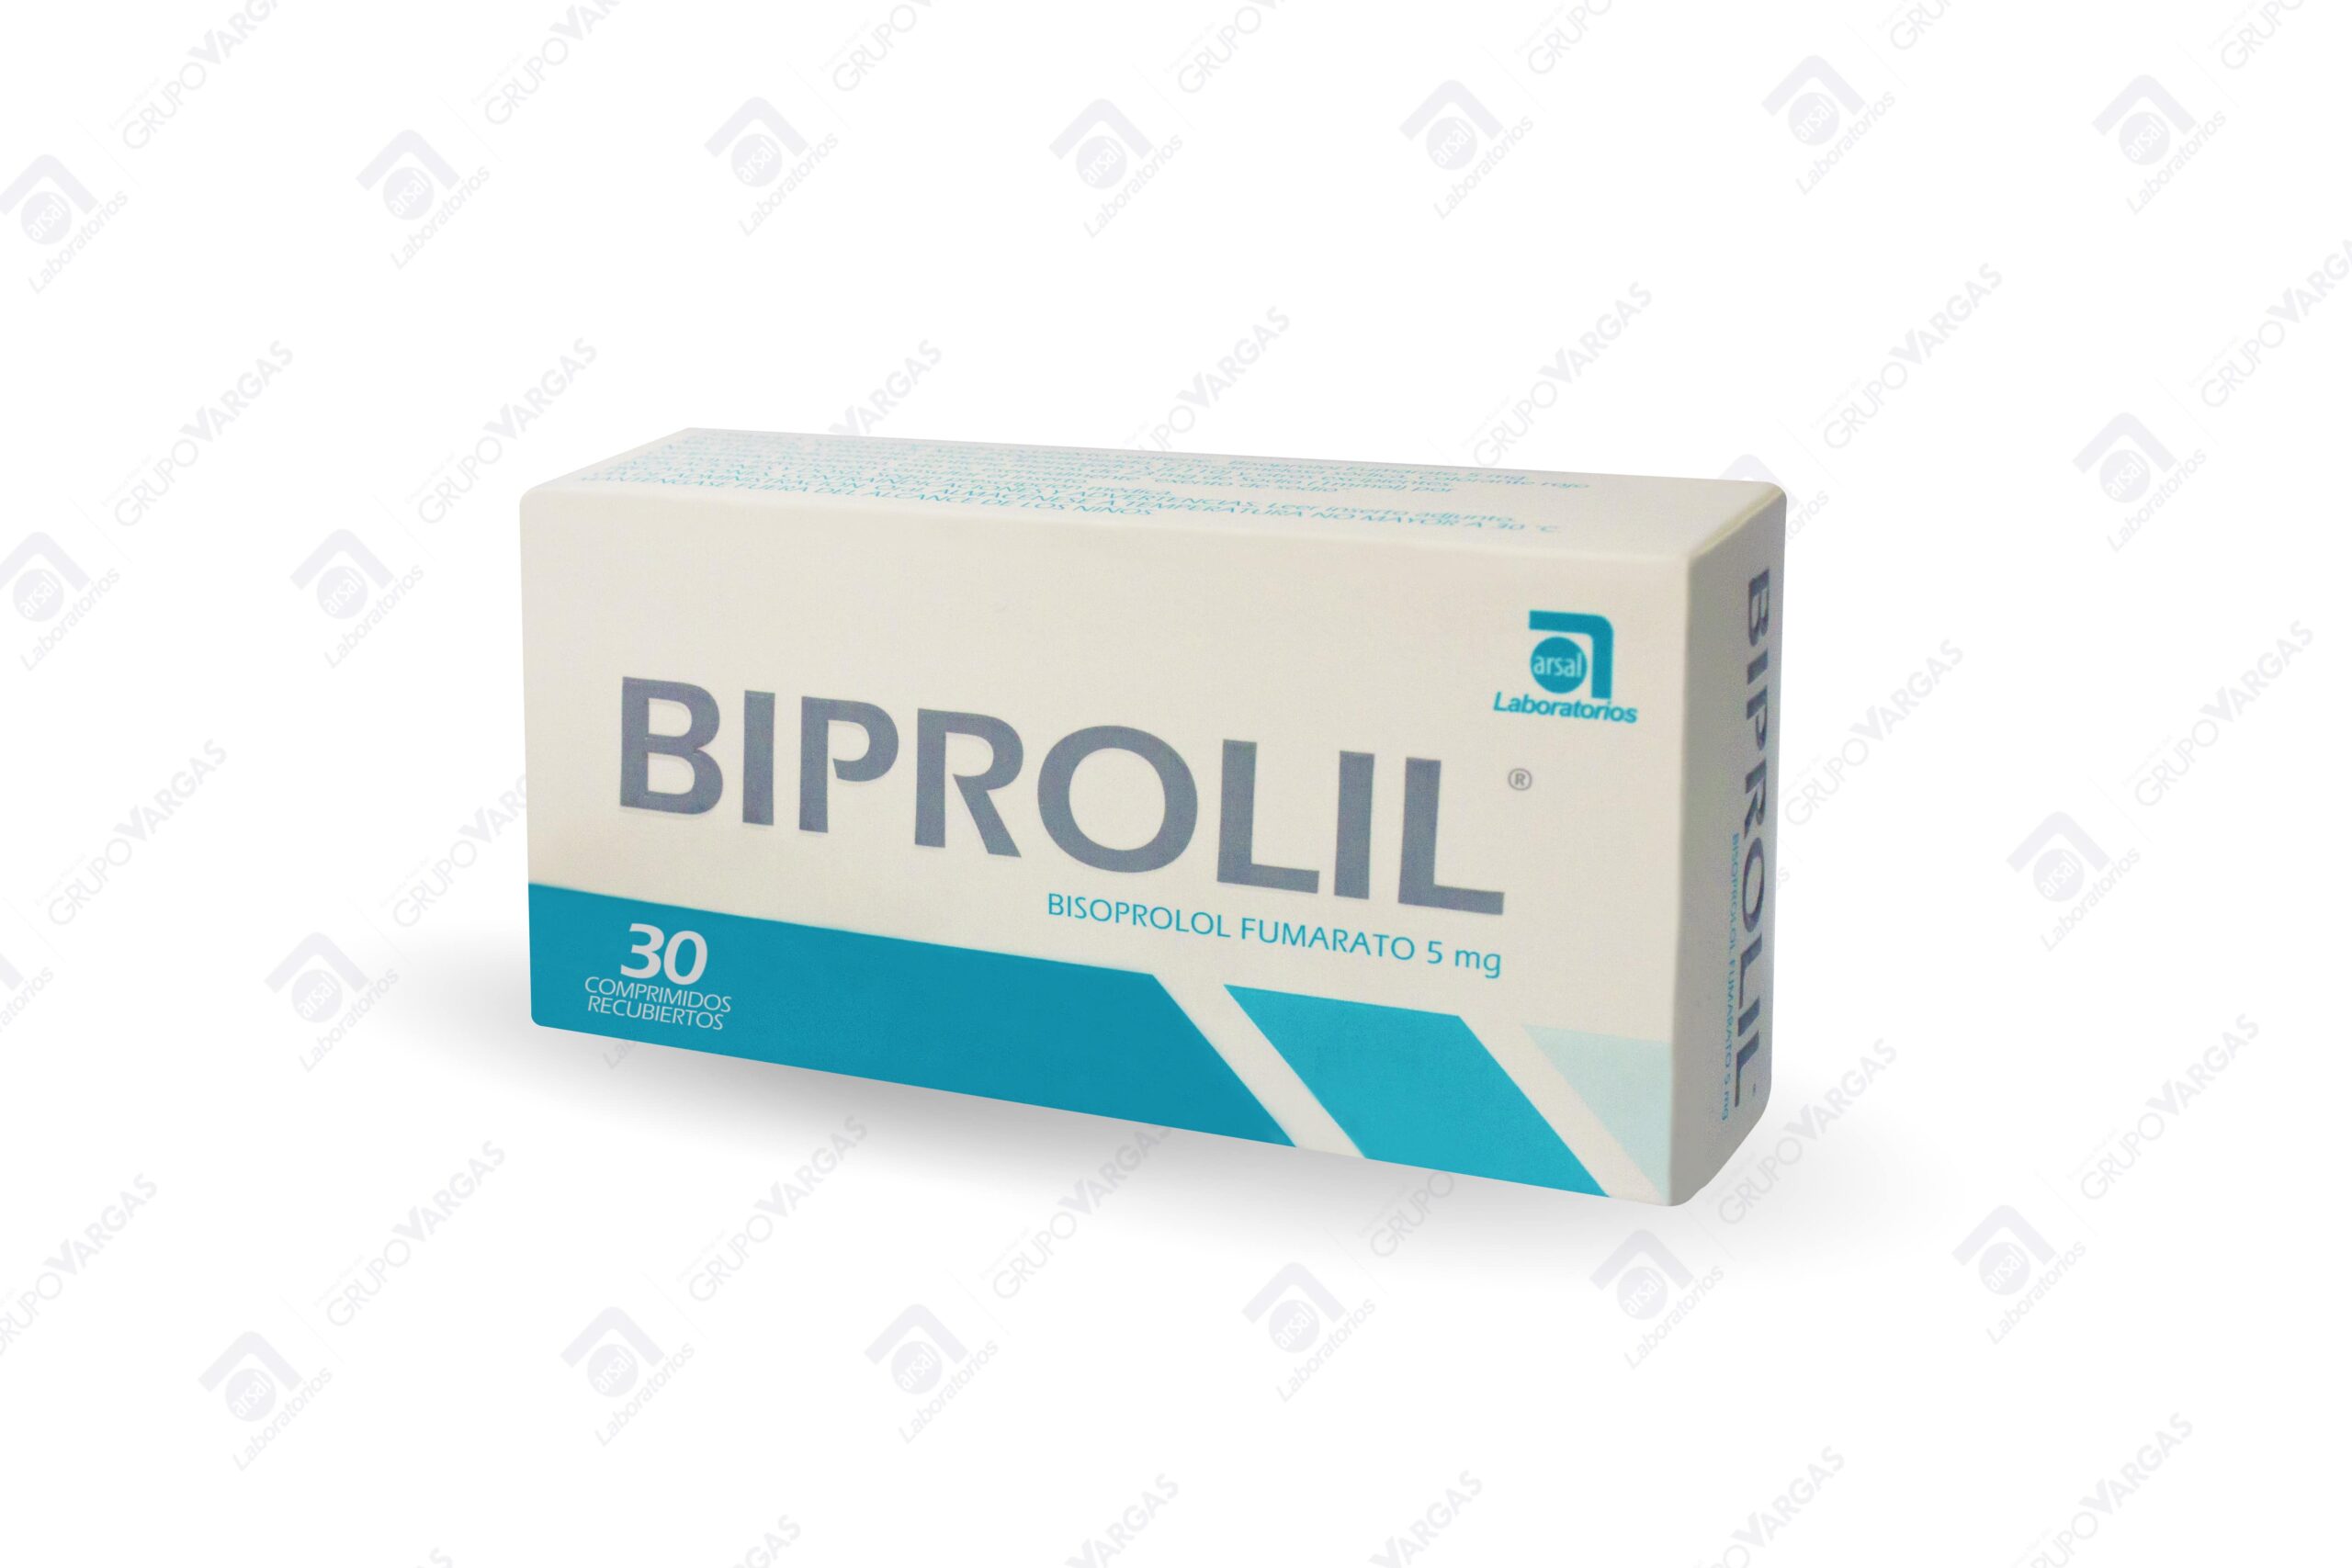 Biprolil® 5mg x 30 comprimidos recubiertos